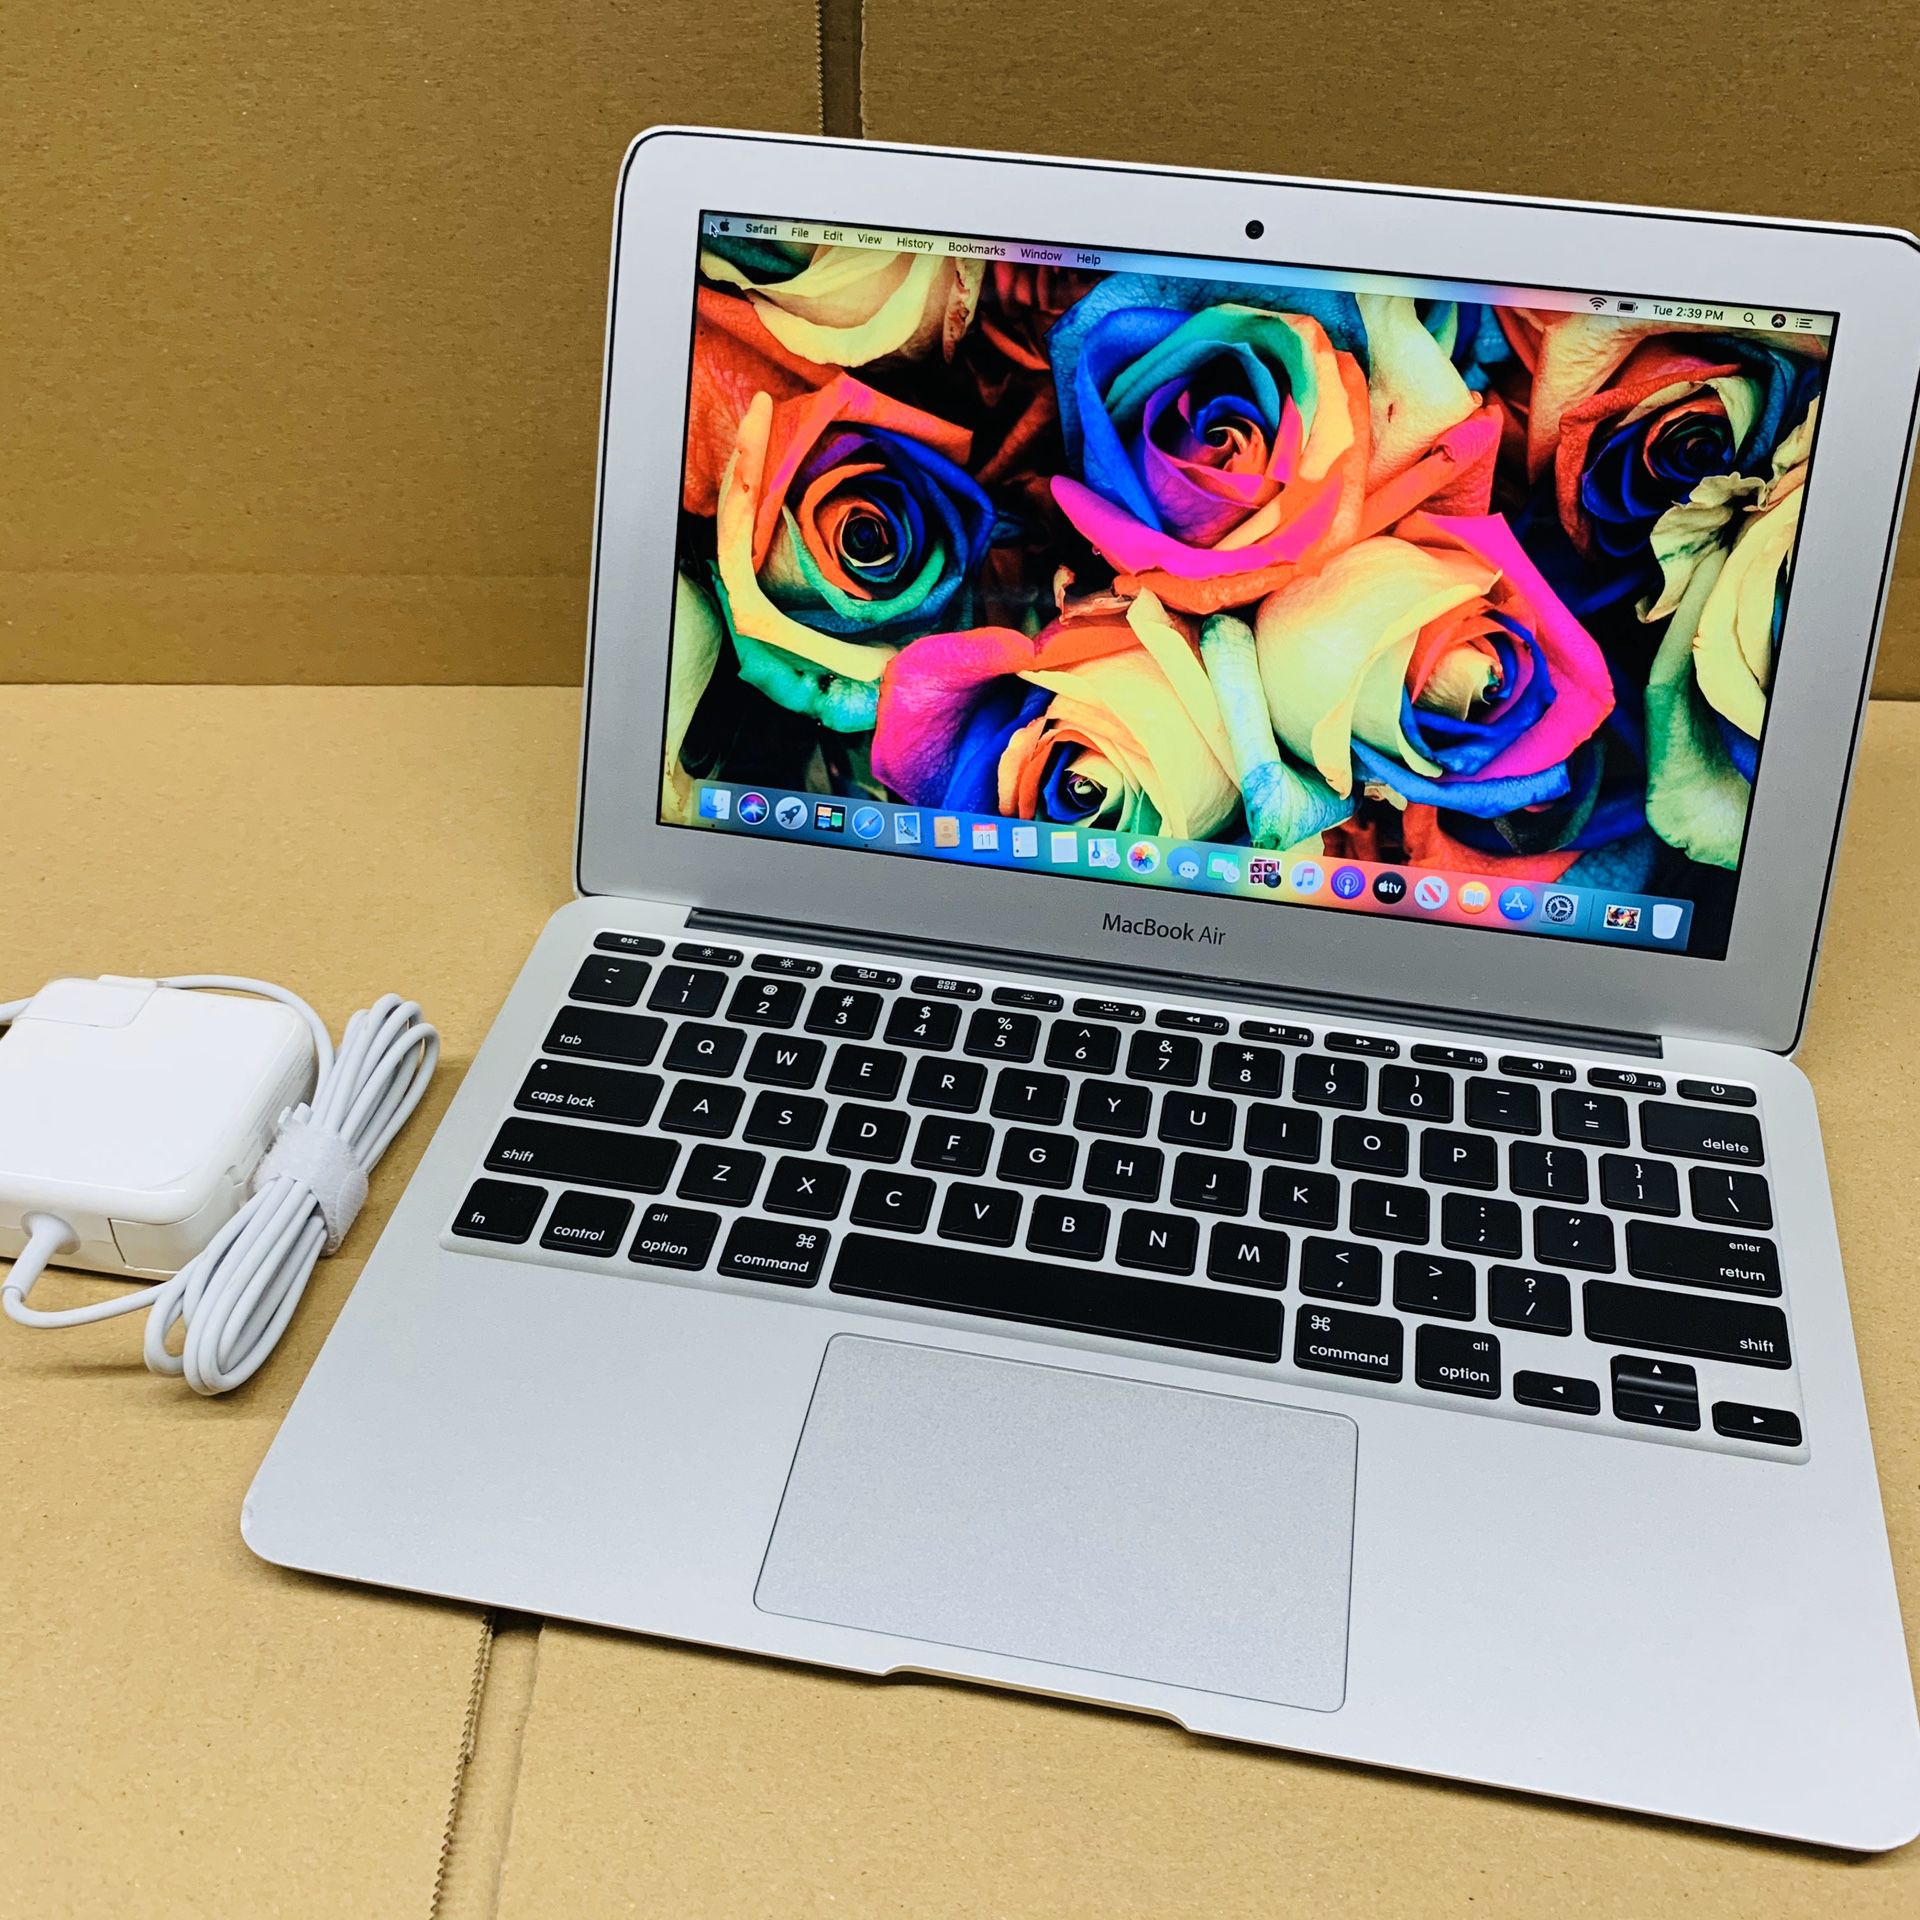 Apple MacBook Air Core i5-4260U Dual-Core 1.4GHz 4GB 128GB SSD 11.6" Notebook (Early 2014) w/12 Months Warranty